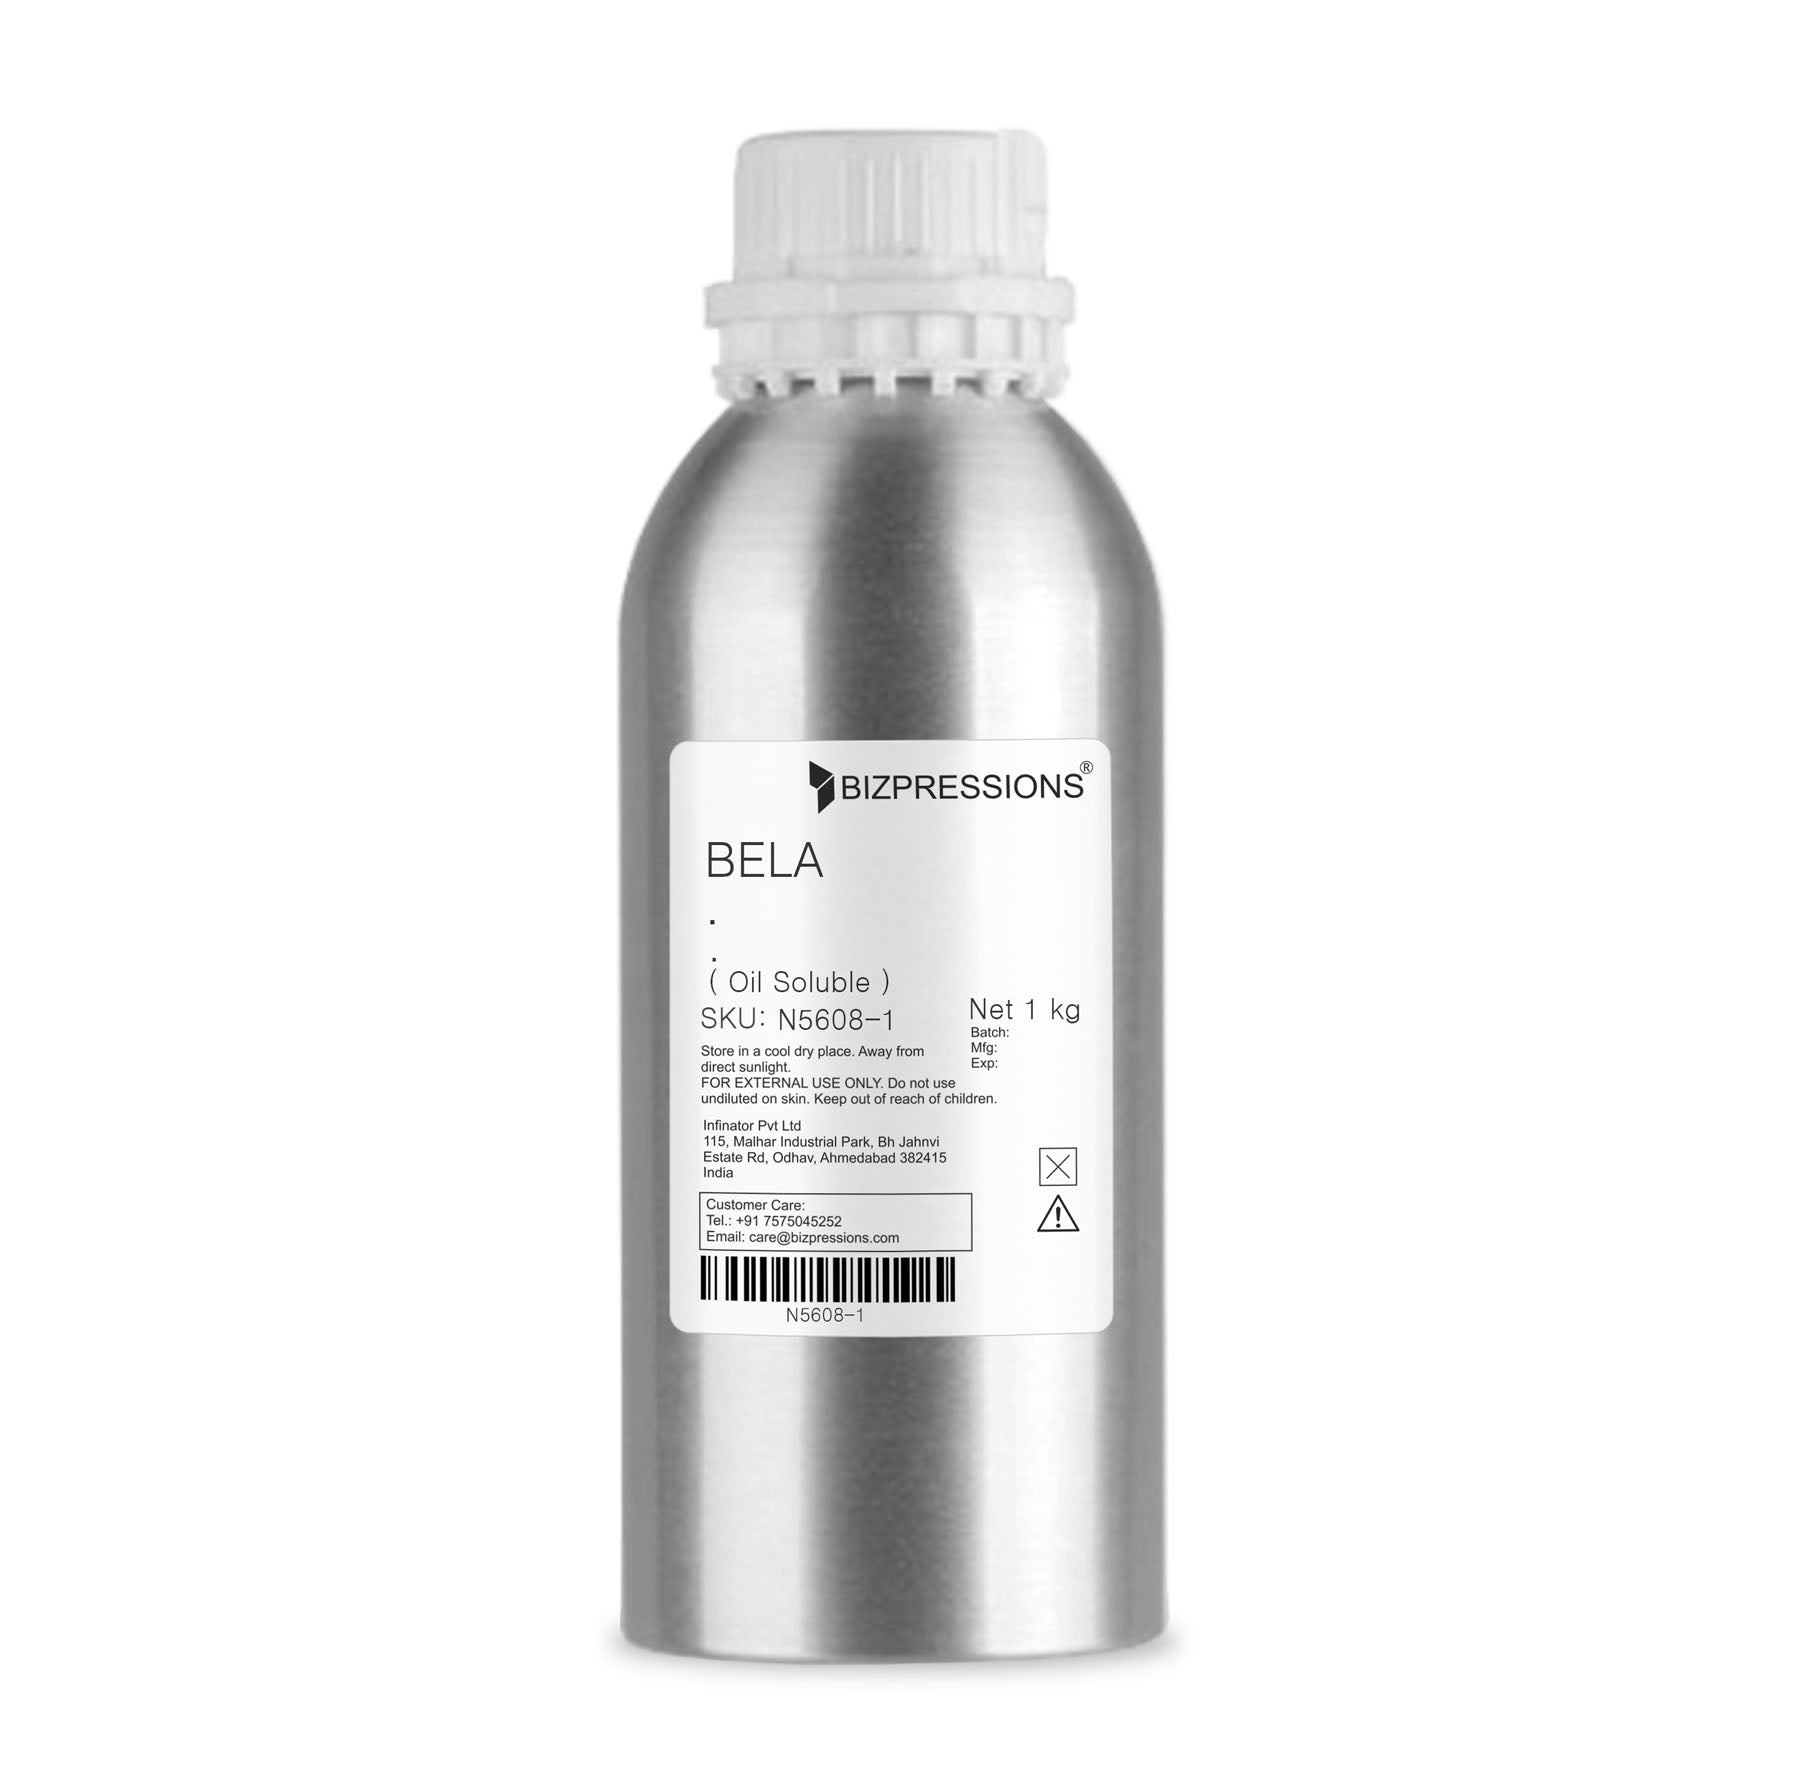 BELA - Fragrance ( Oil Soluble ) - 1 kg